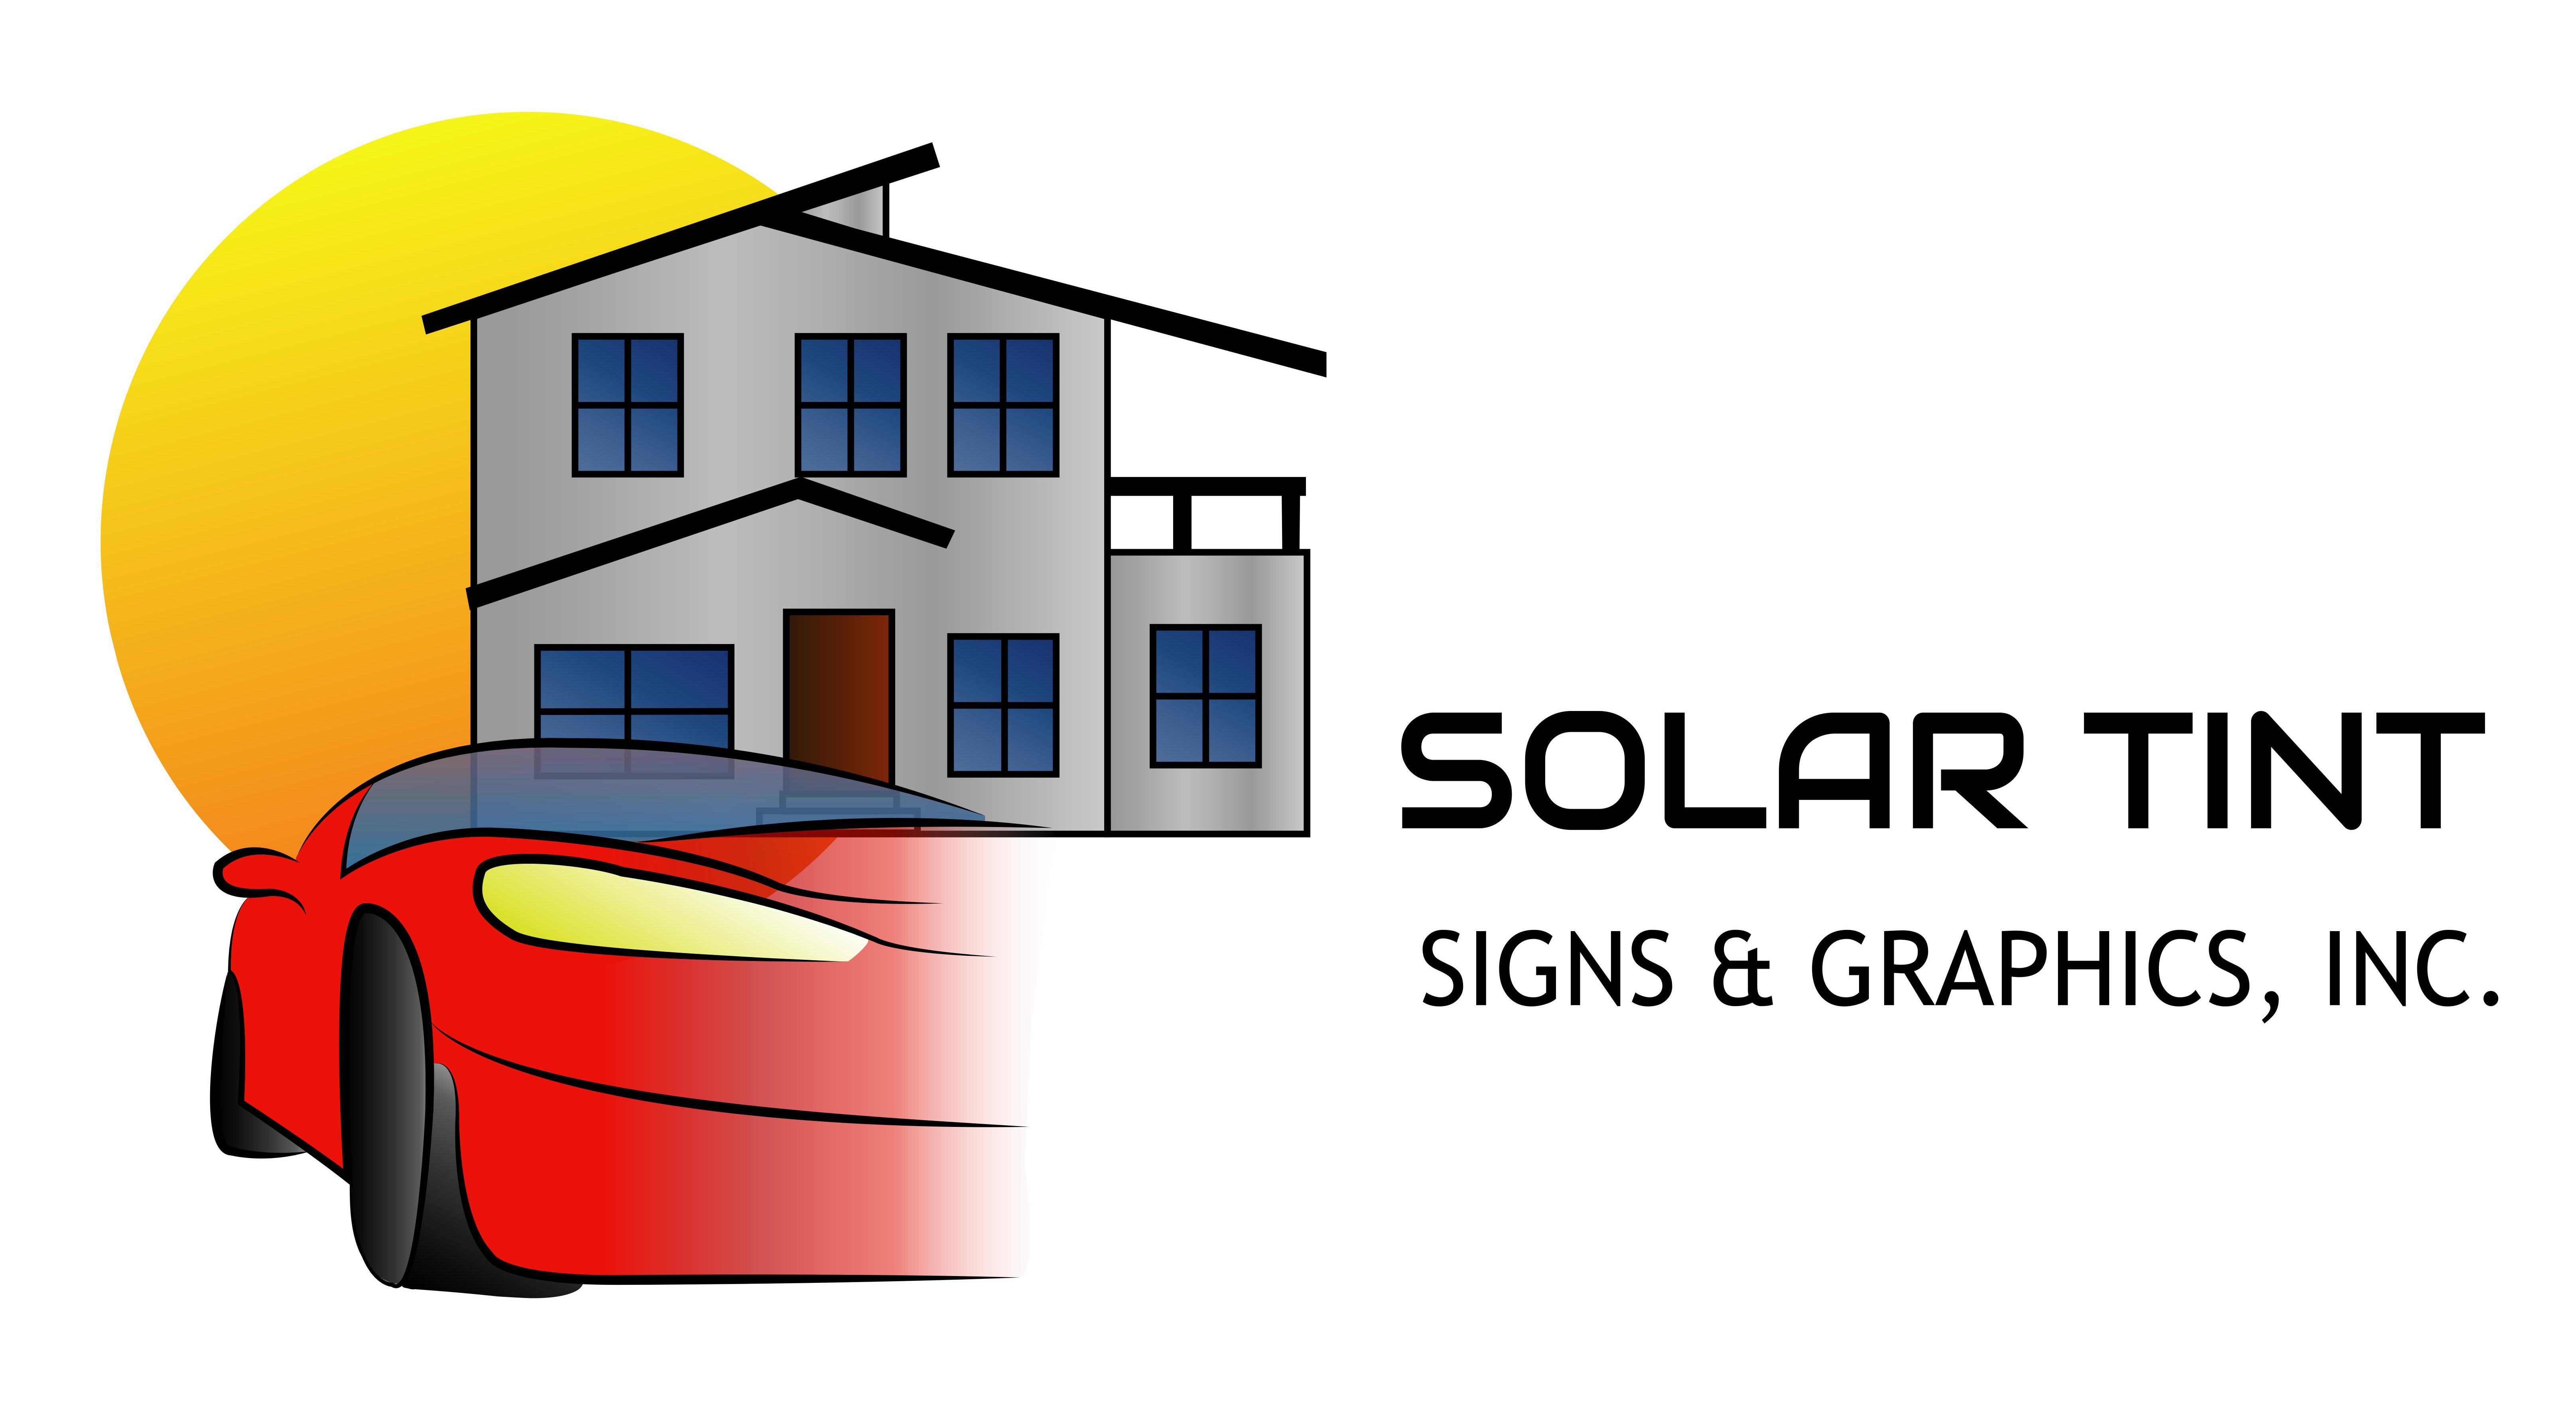 Solar Tint Signs & Graphics, Inc. Logo